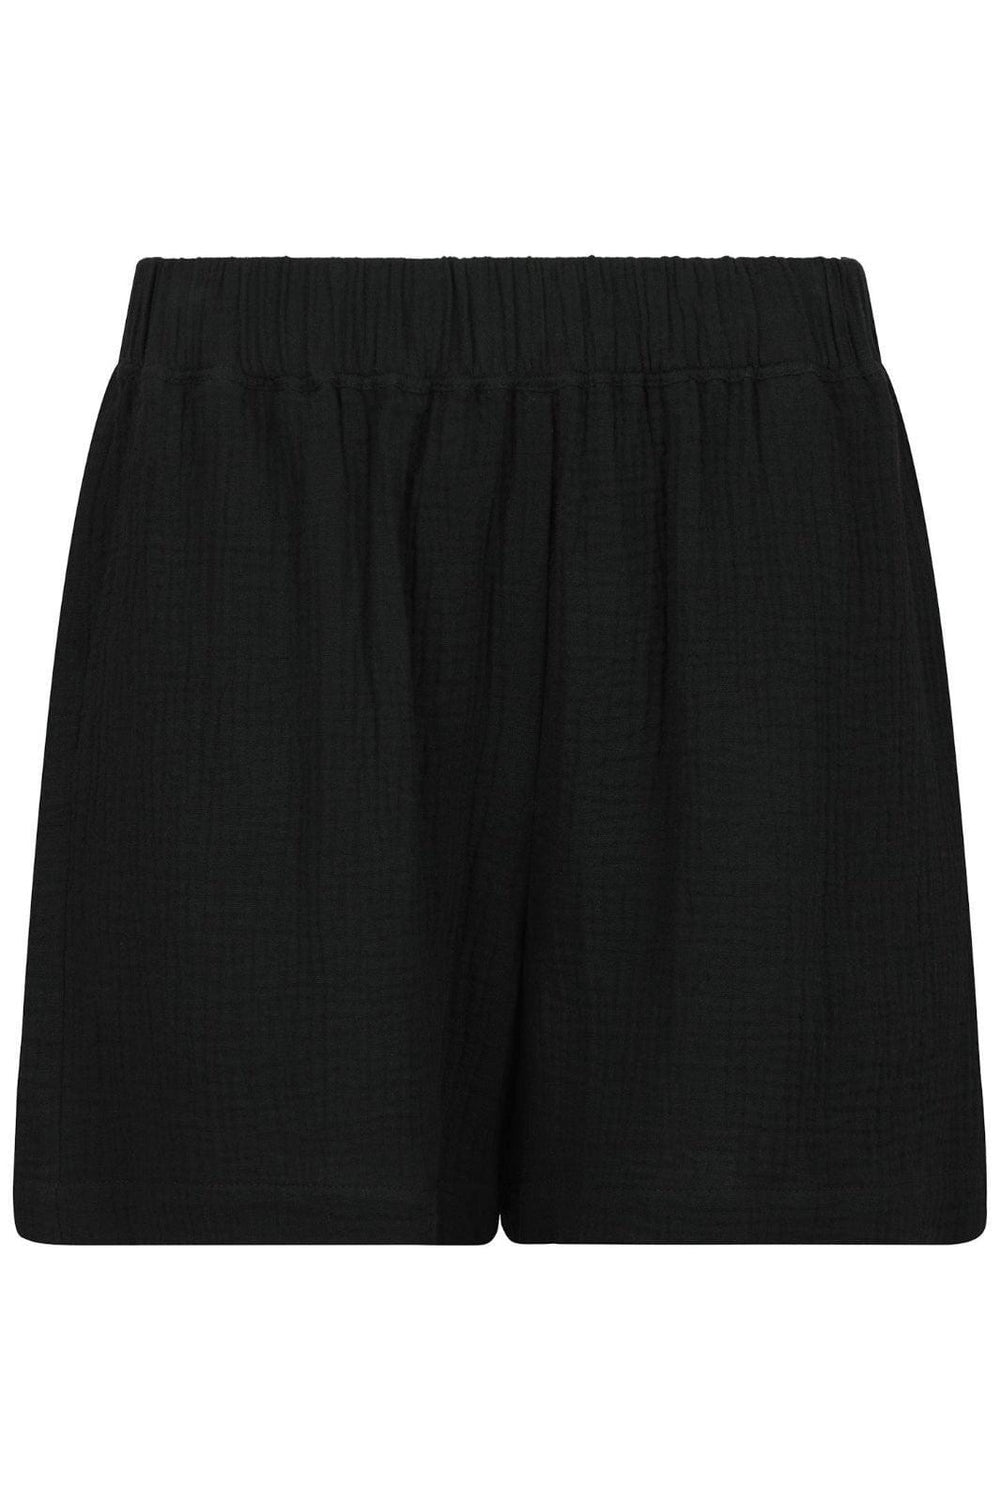 Neo Noir - Ally Waffle Shorts - Black Shorts 